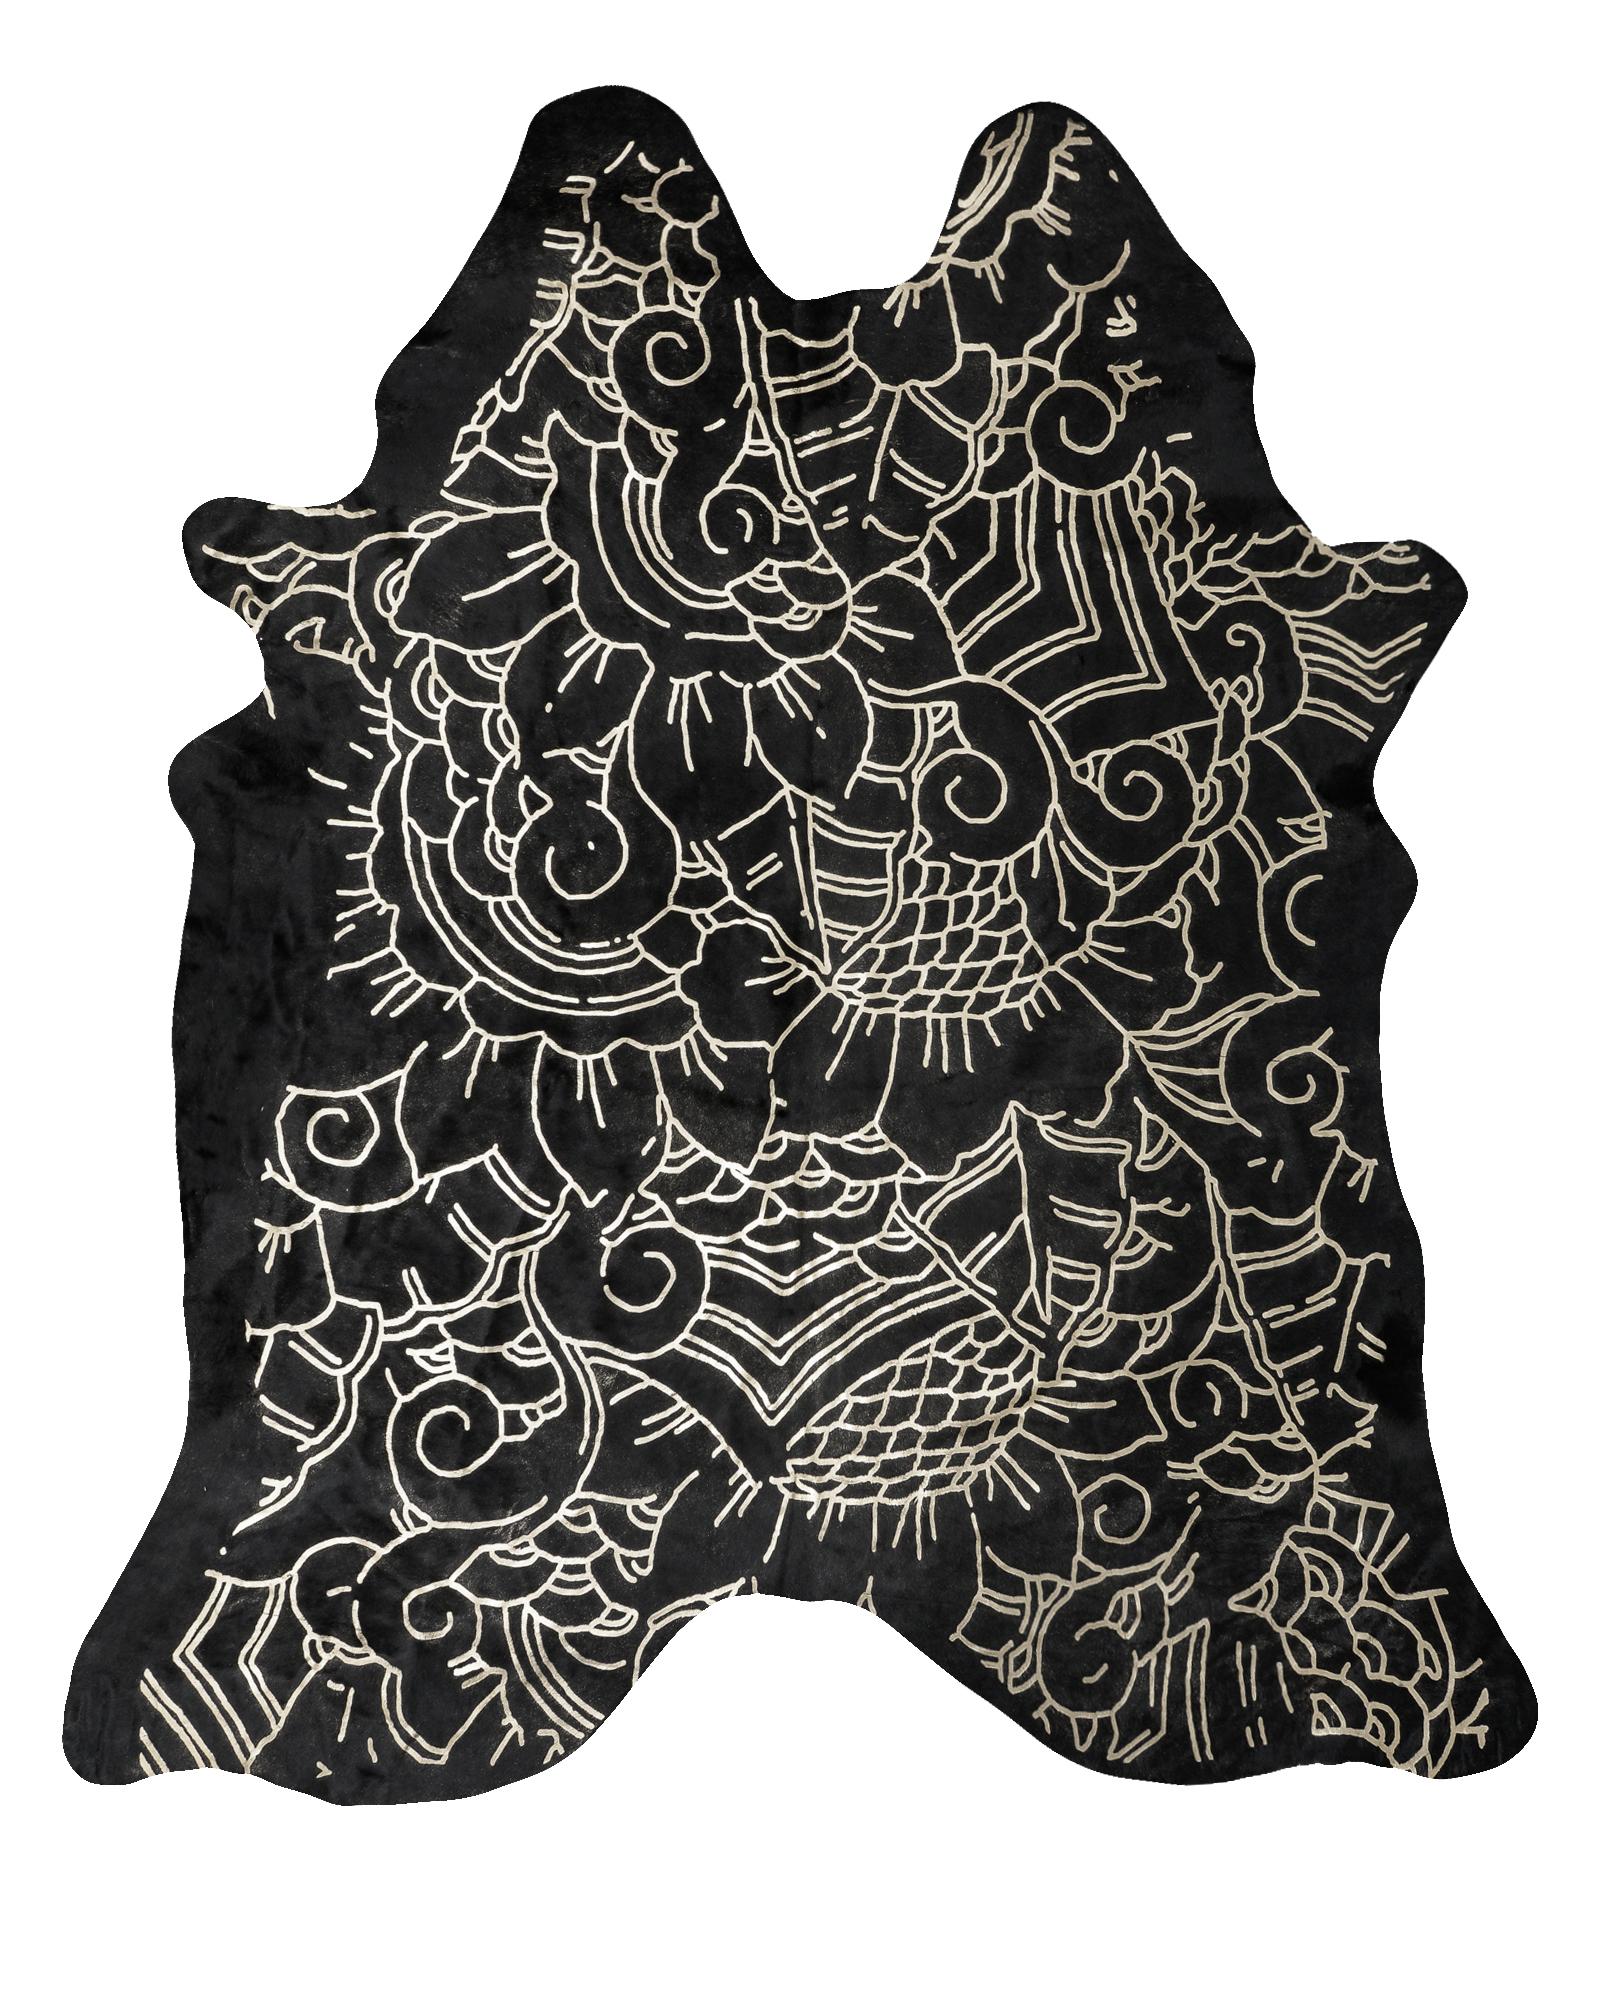 Indonesian Silver Metallic Boho Batik Pattern Black Cowhide Rug, Medium For Sale